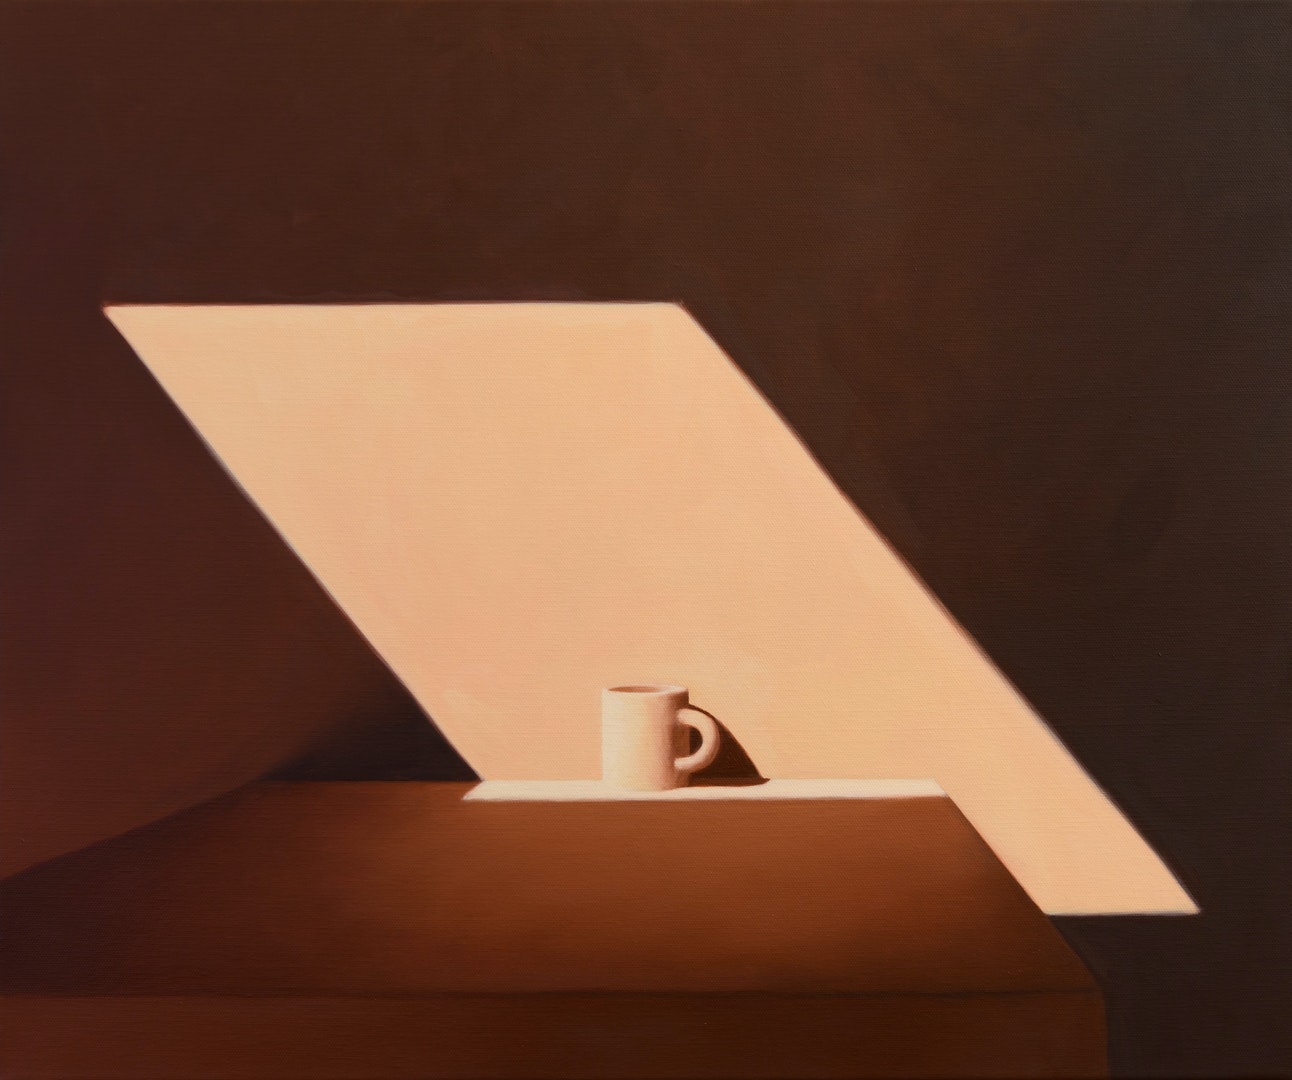 'At Rest', Jill Tate, Oil on canvas, 51 x 61 cm